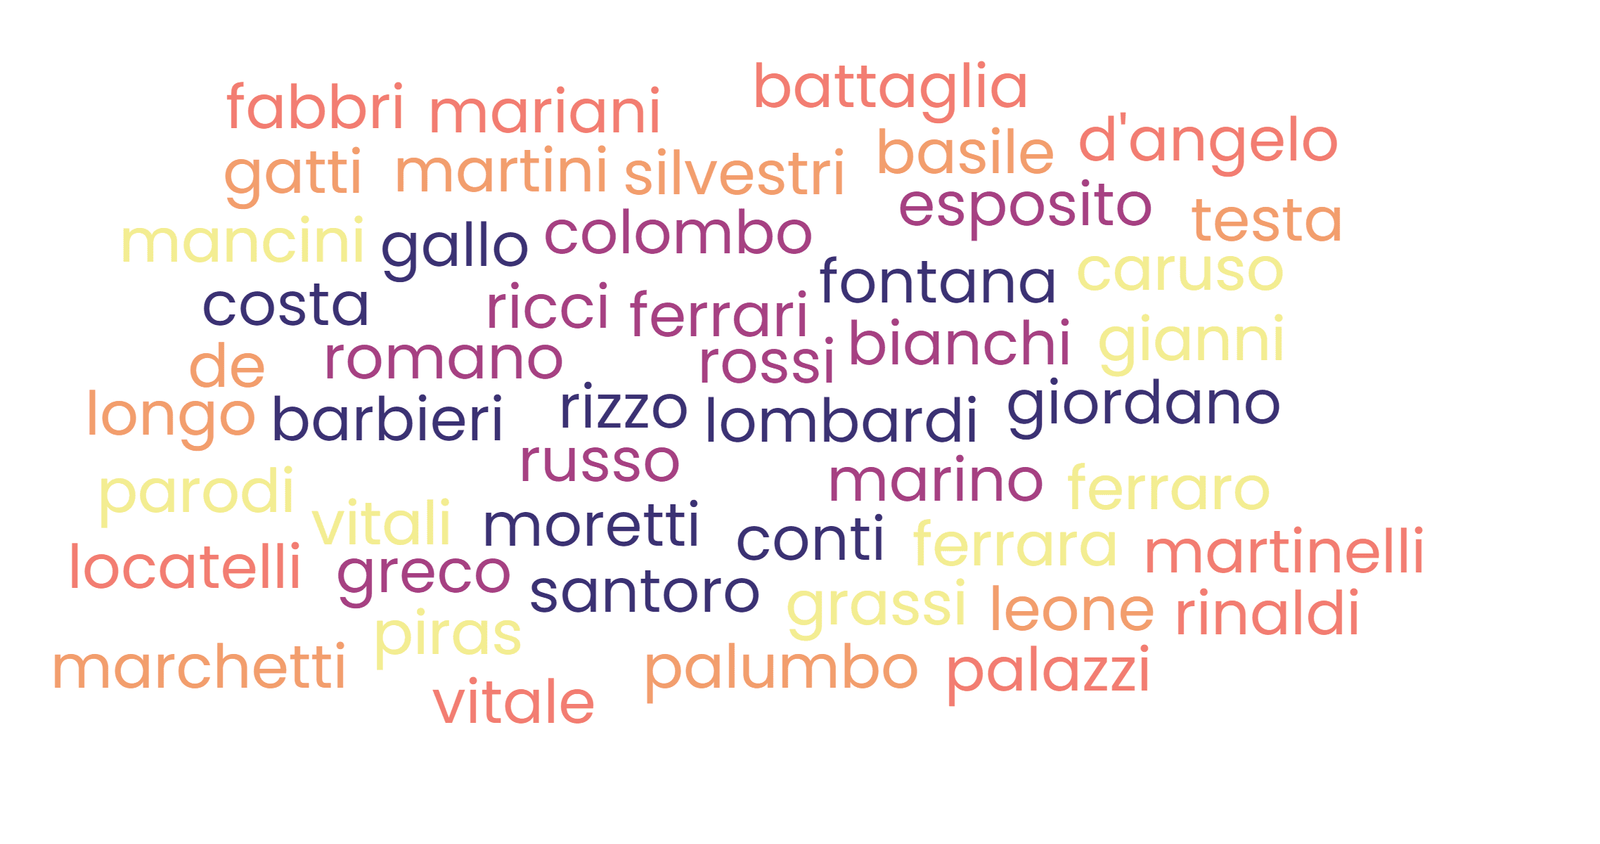 Italian surnames word-cloud